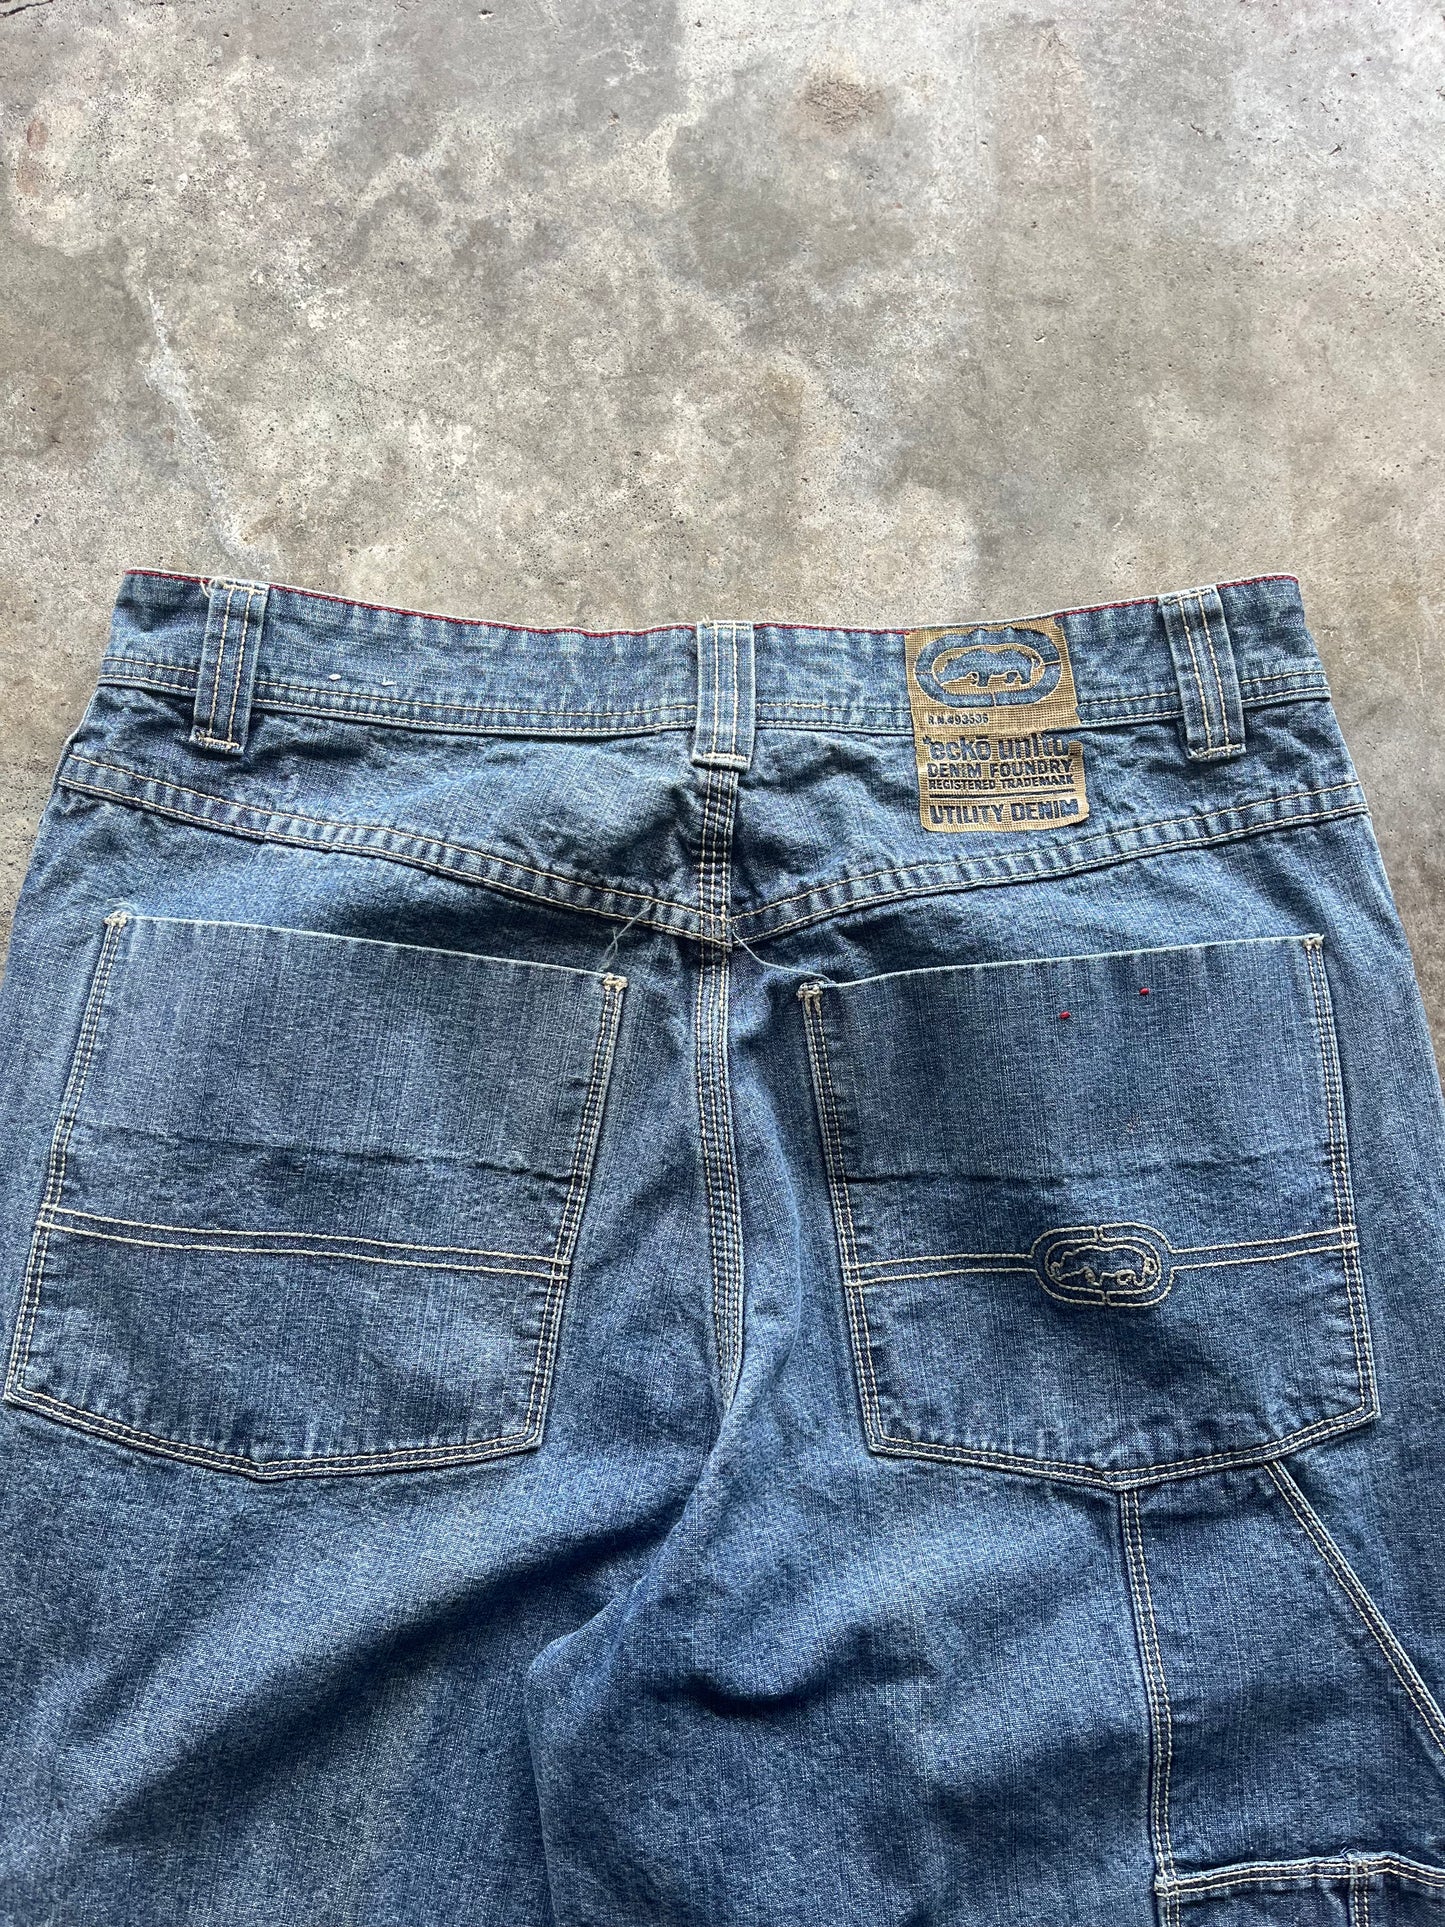 (32) Ecko Unltd Denim Jeans